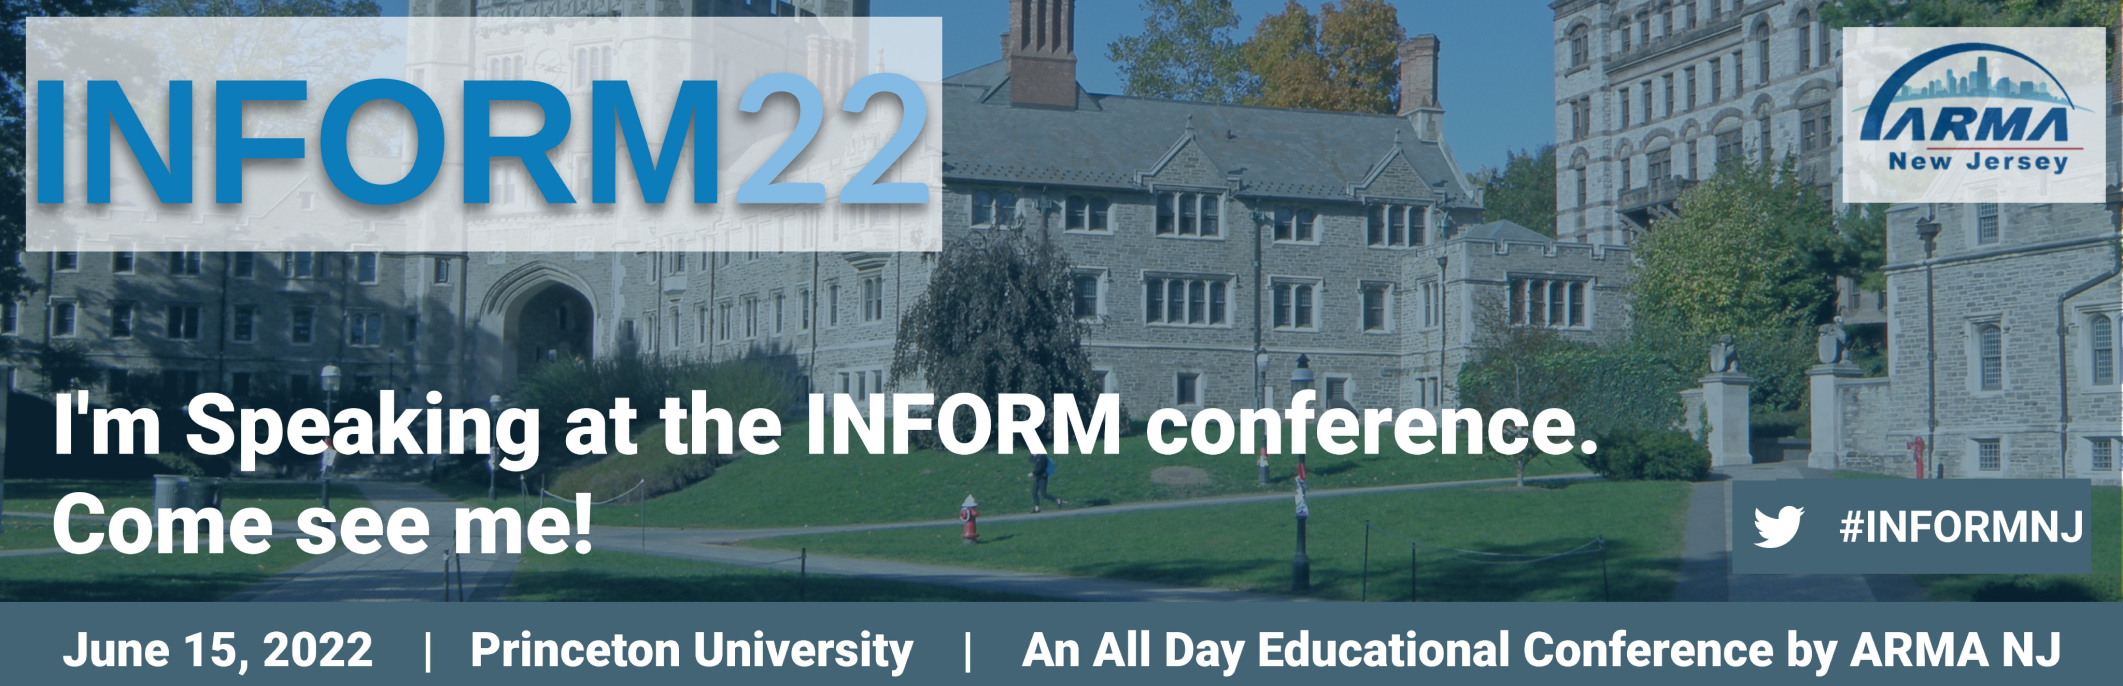 Inform 22 Conference